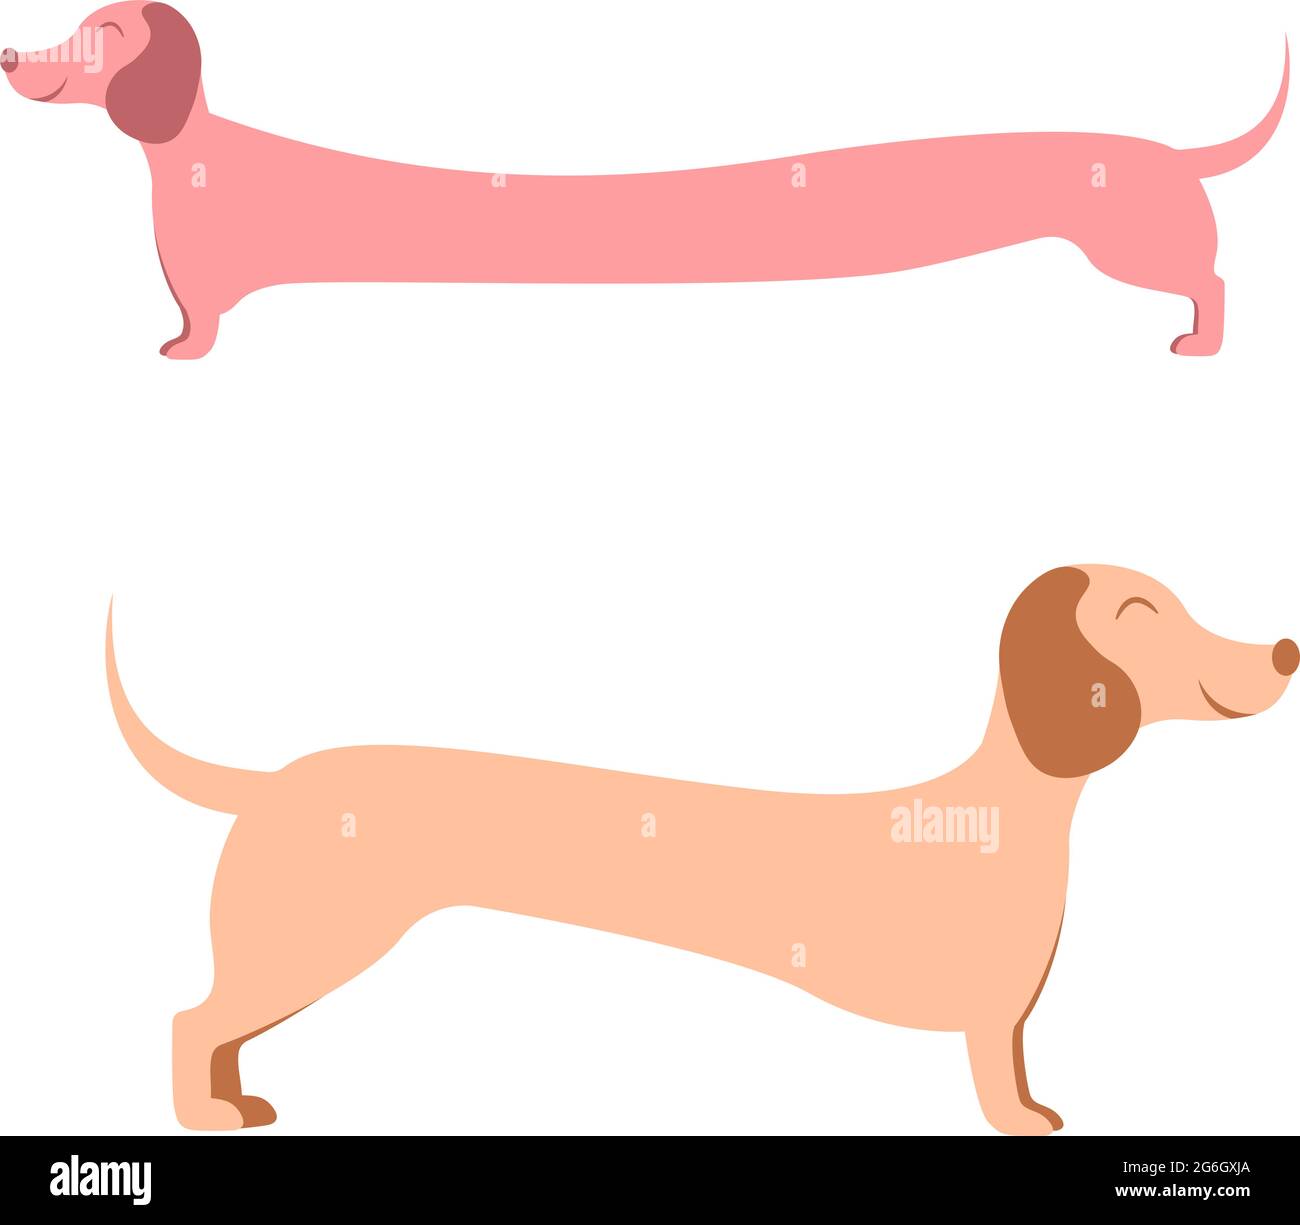 dachshund, wiener dog on white background vector illustration Stock Vector